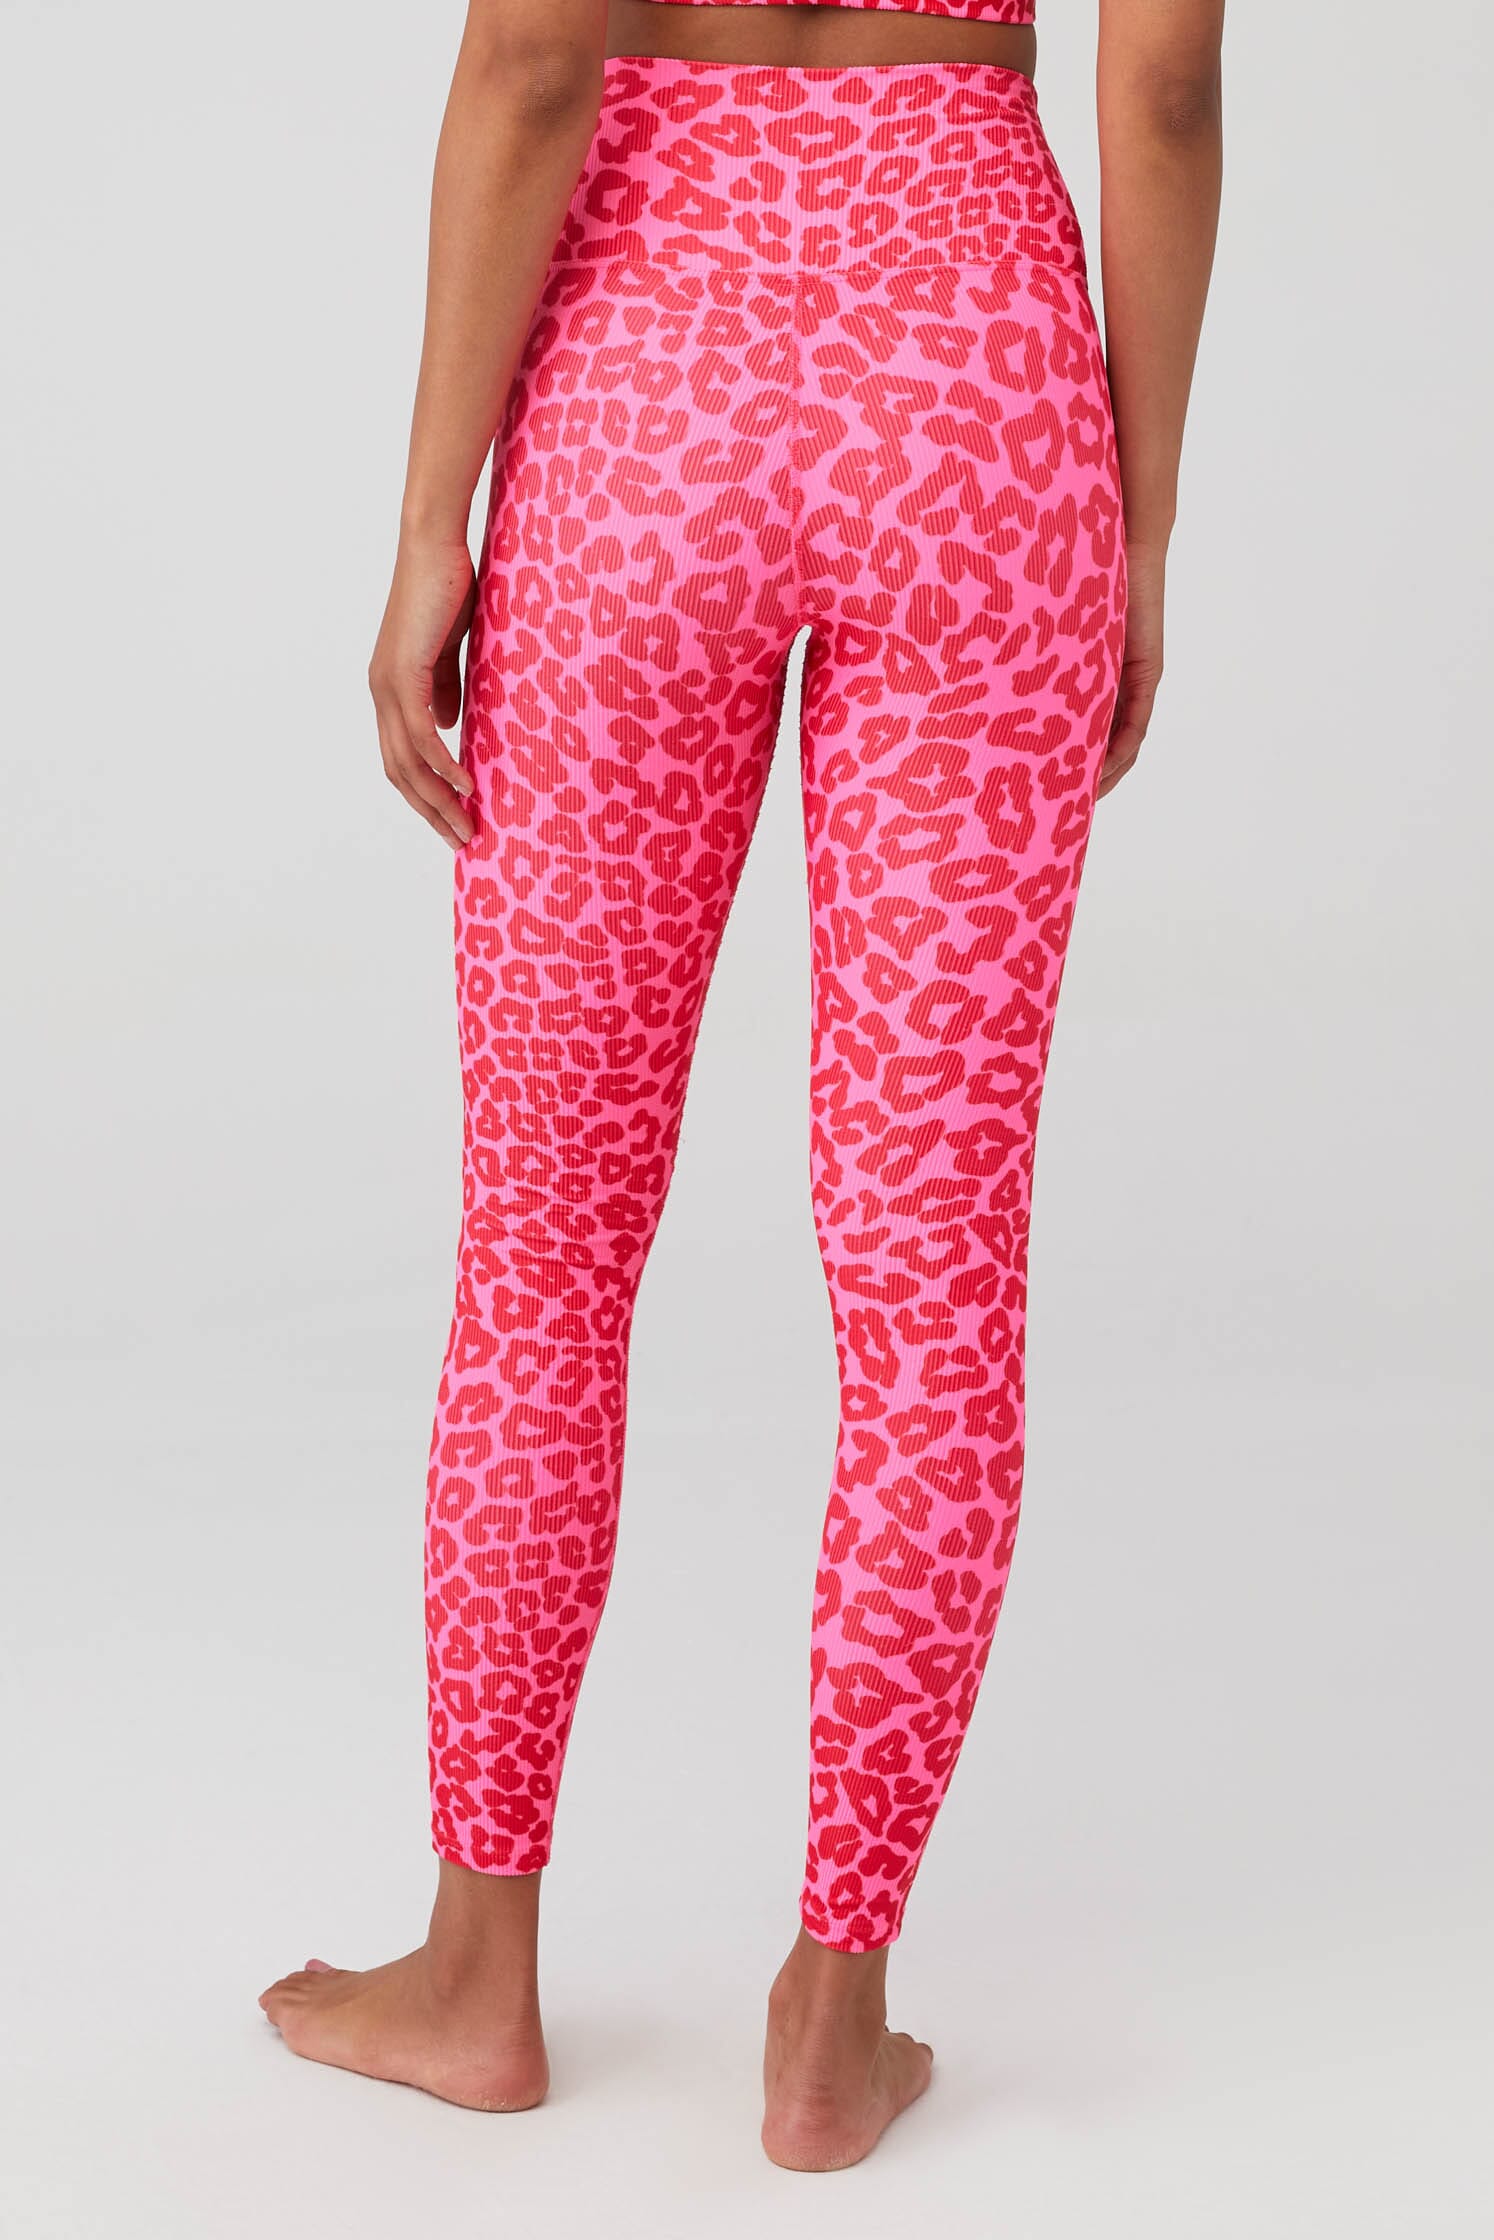 Hot Pink Leopard All Over Print Leggings